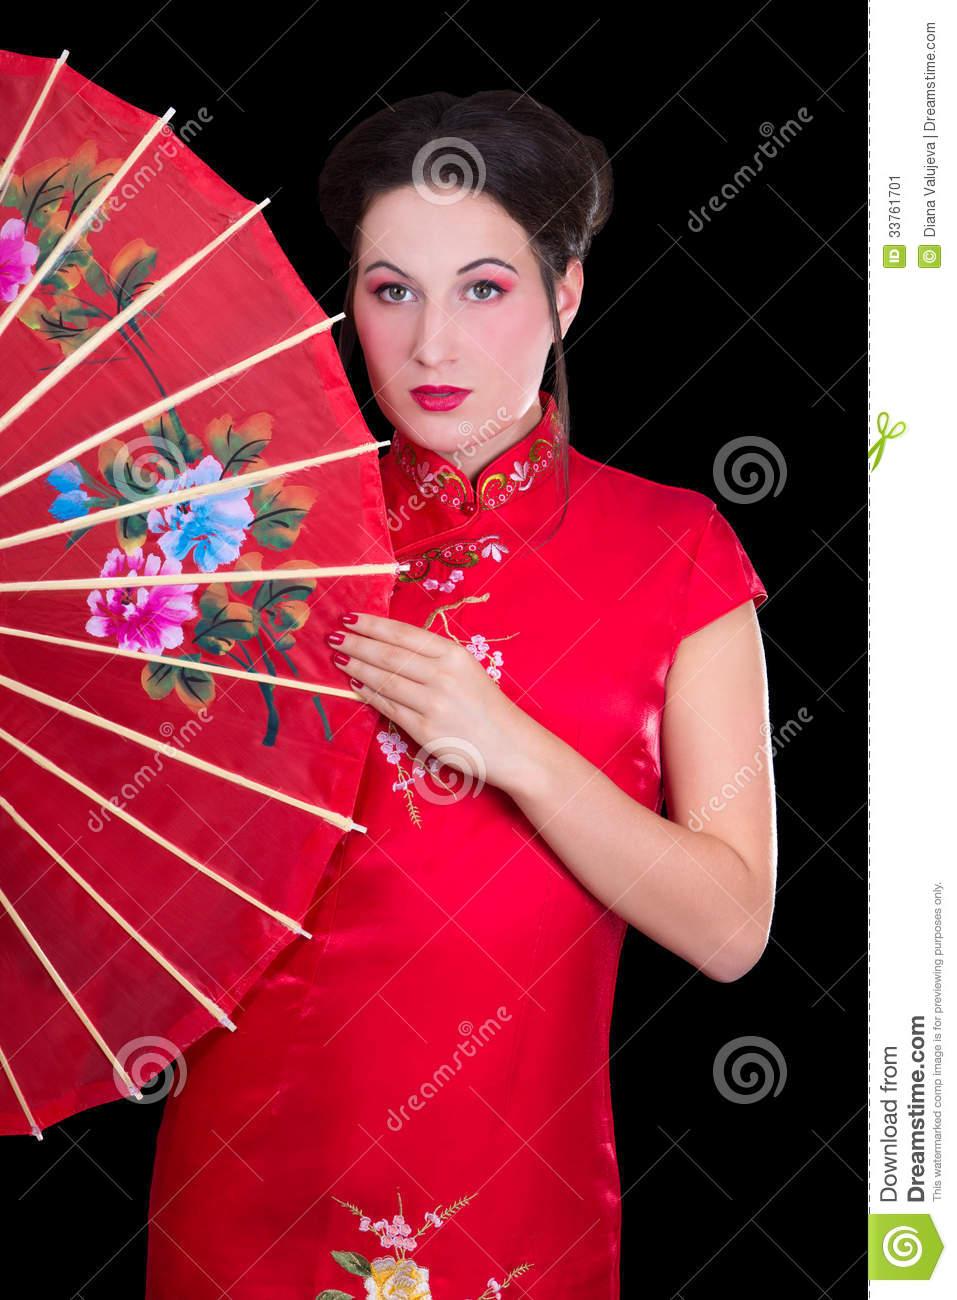 Viste como una geisha 